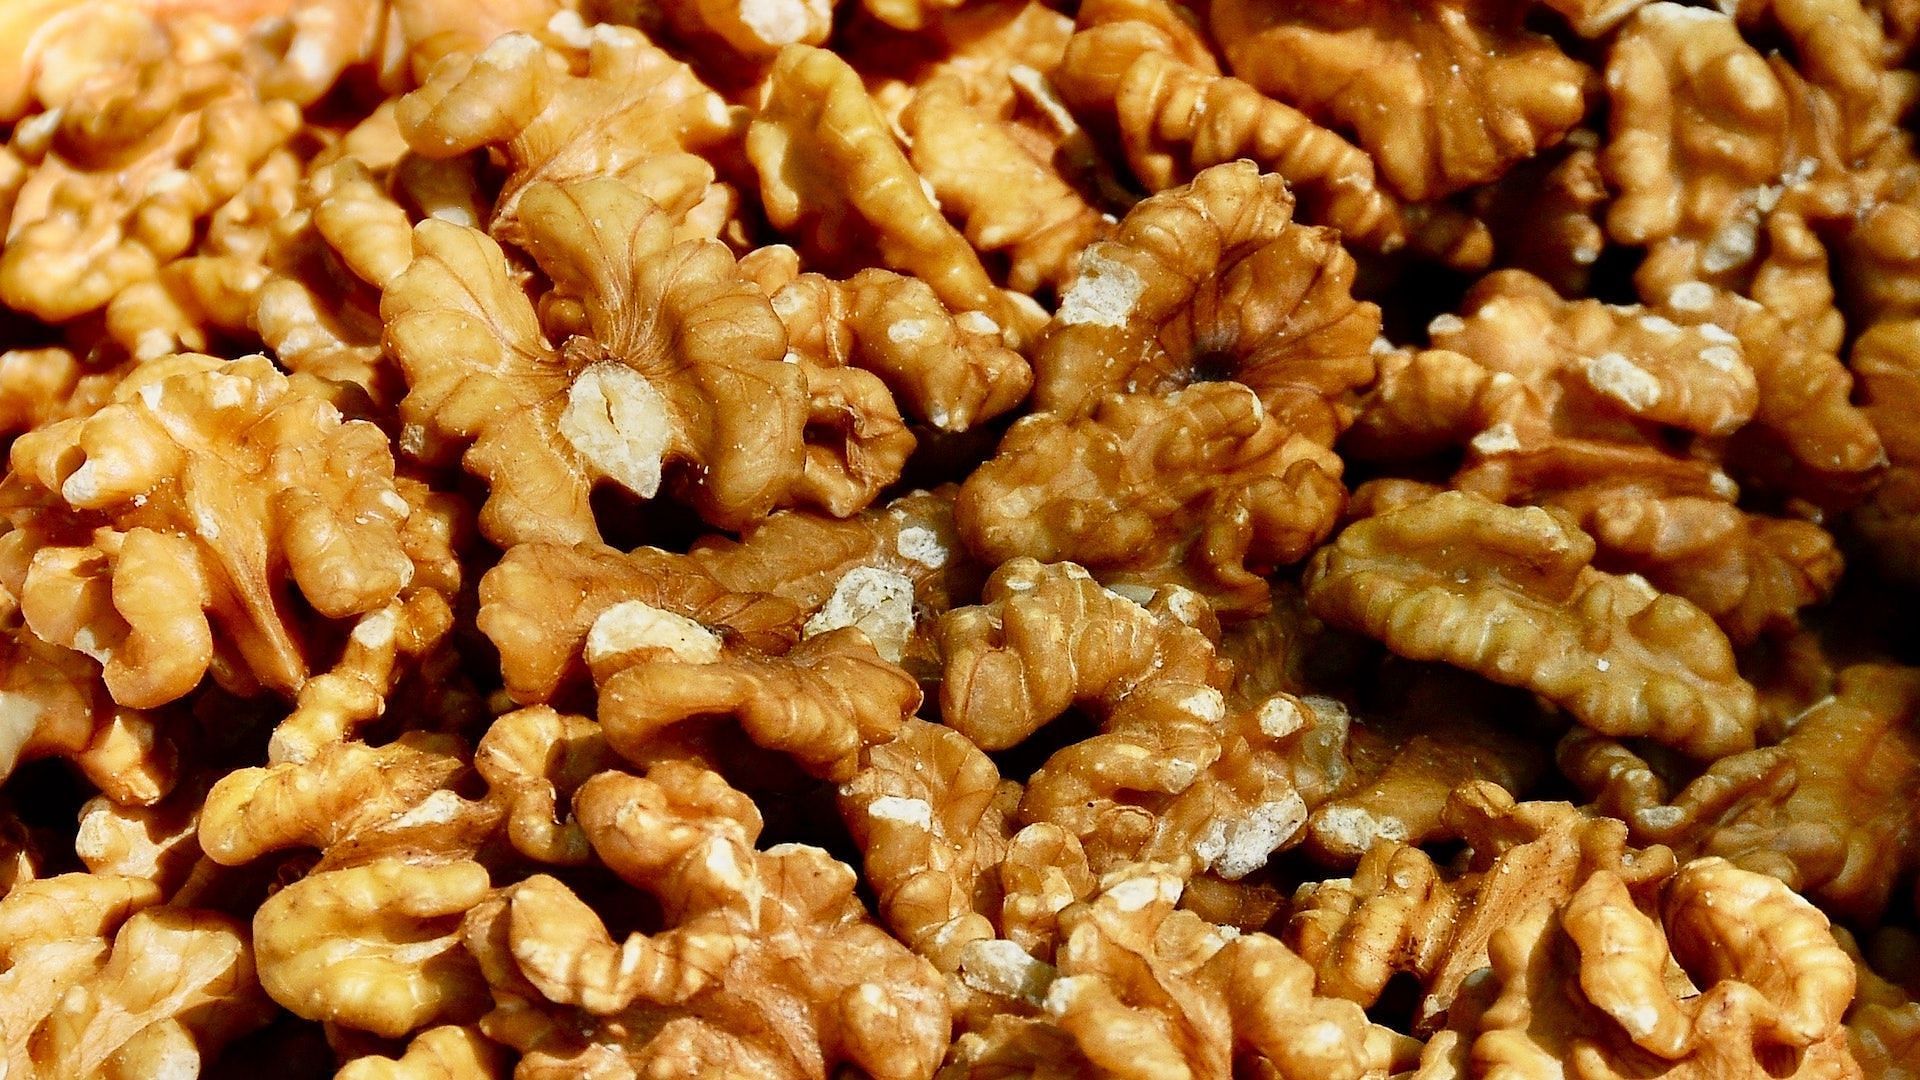 A shape of the walnut resembles a human brain (Image via Pexels/Peter De Vink)